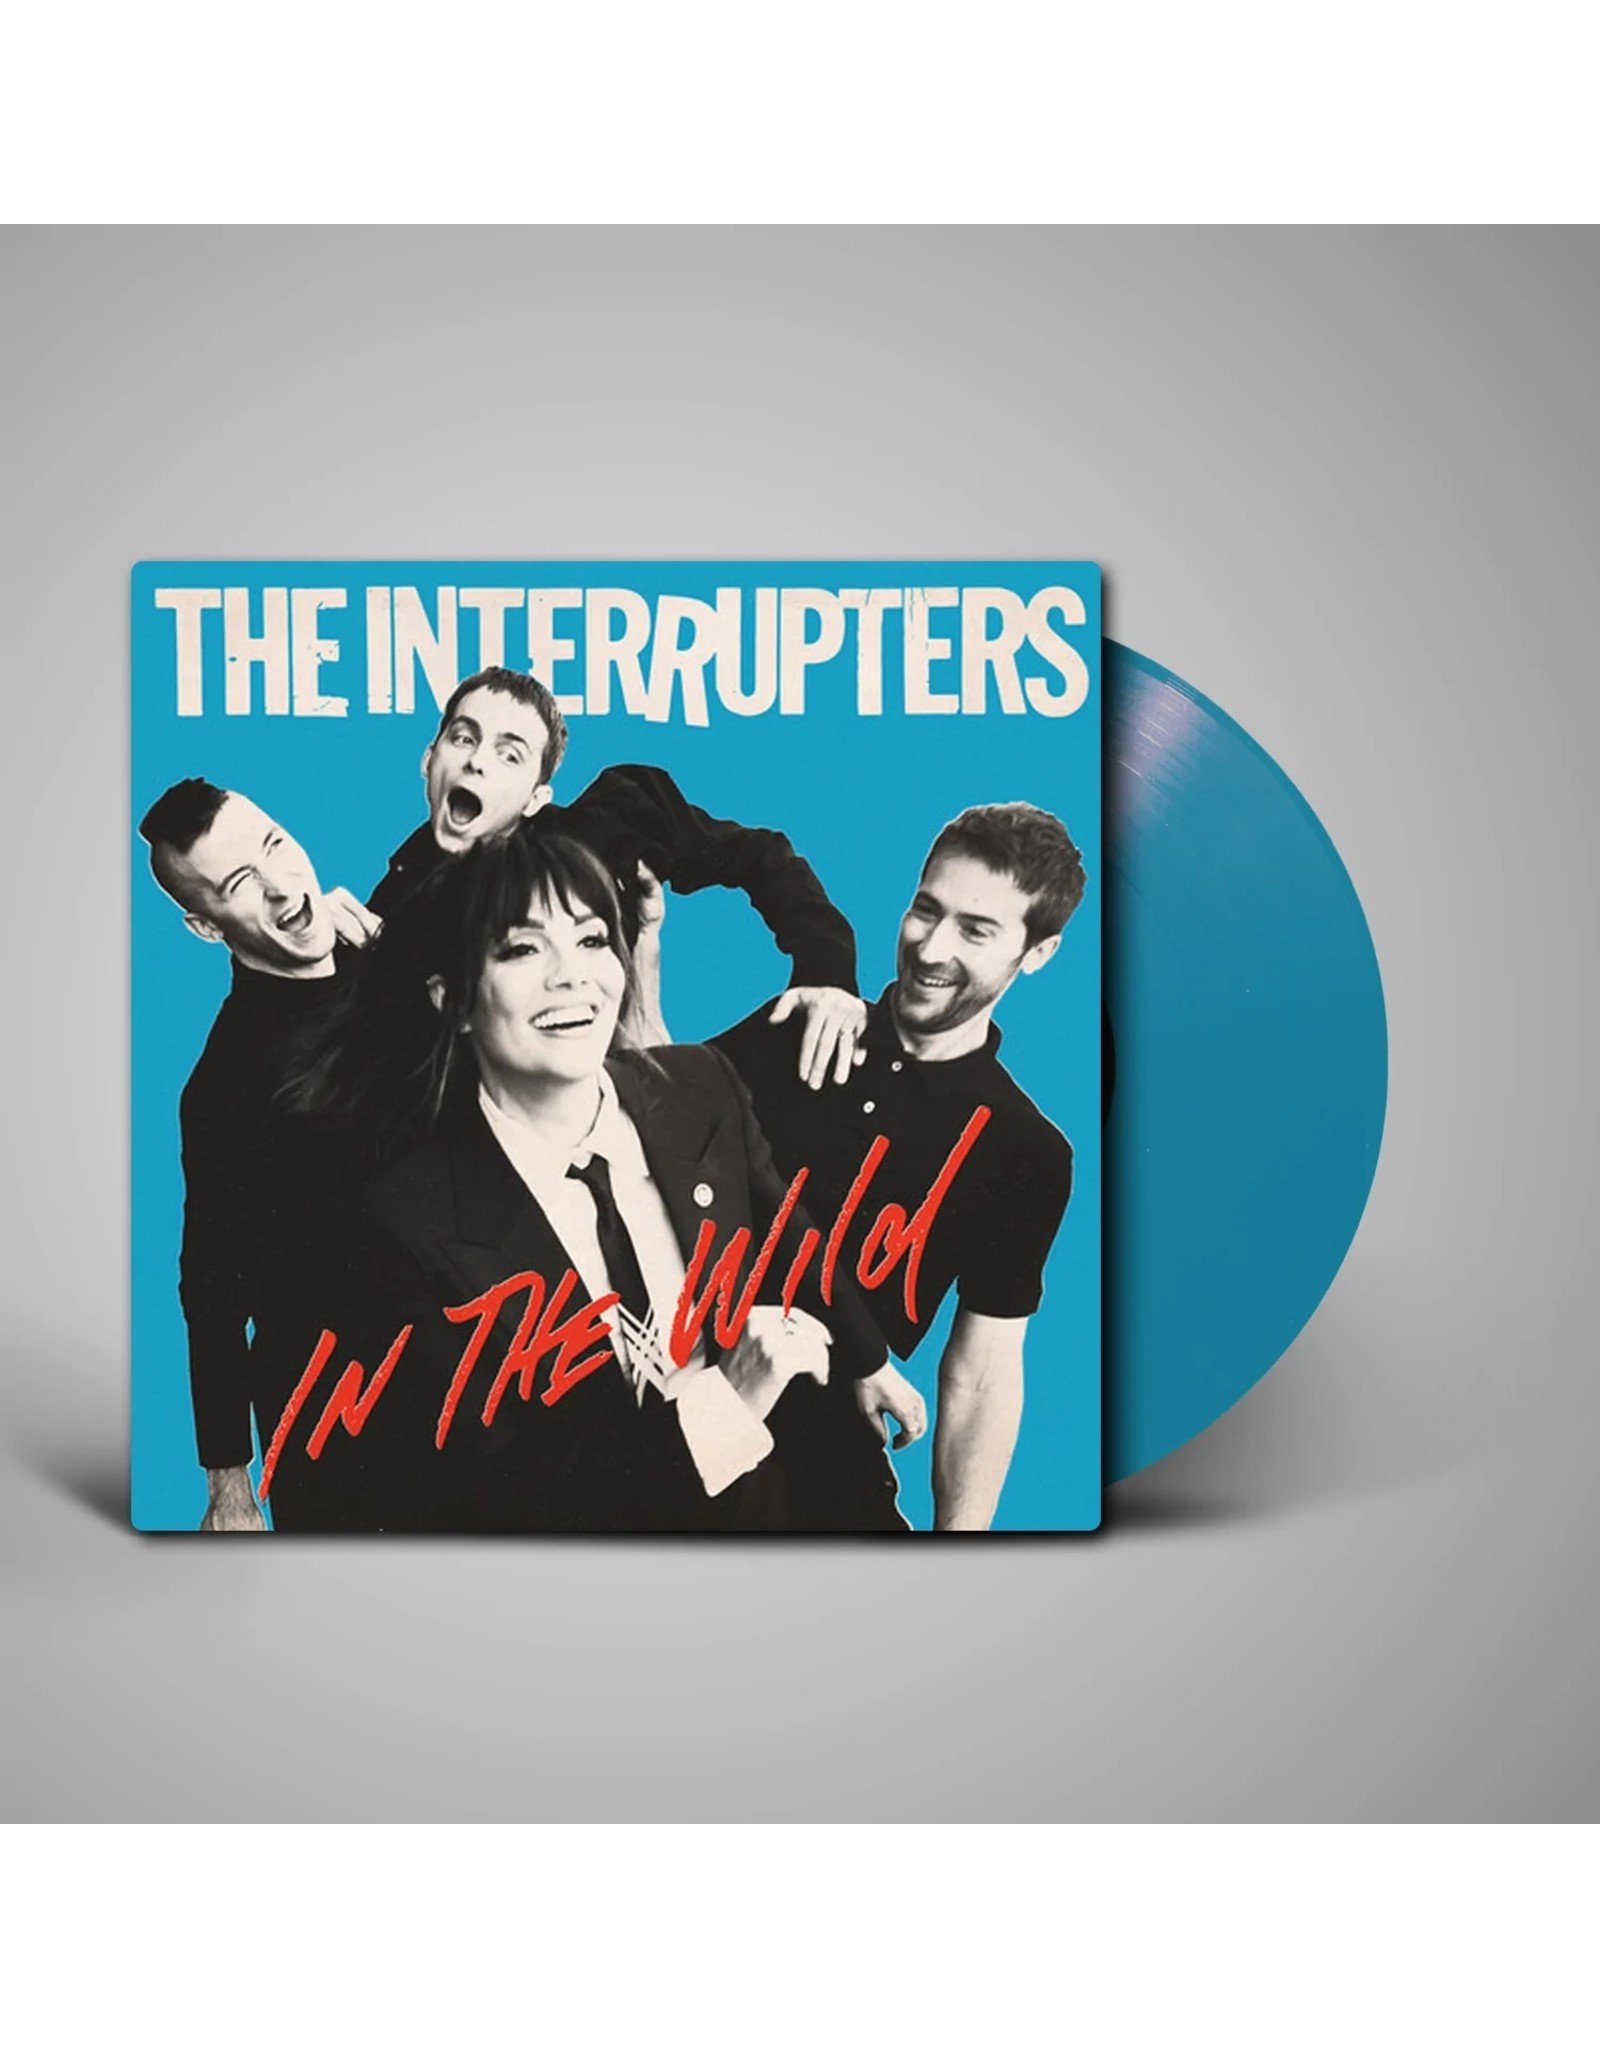 Interrupters - In The Wild (Exclusive Blue Vinyl)